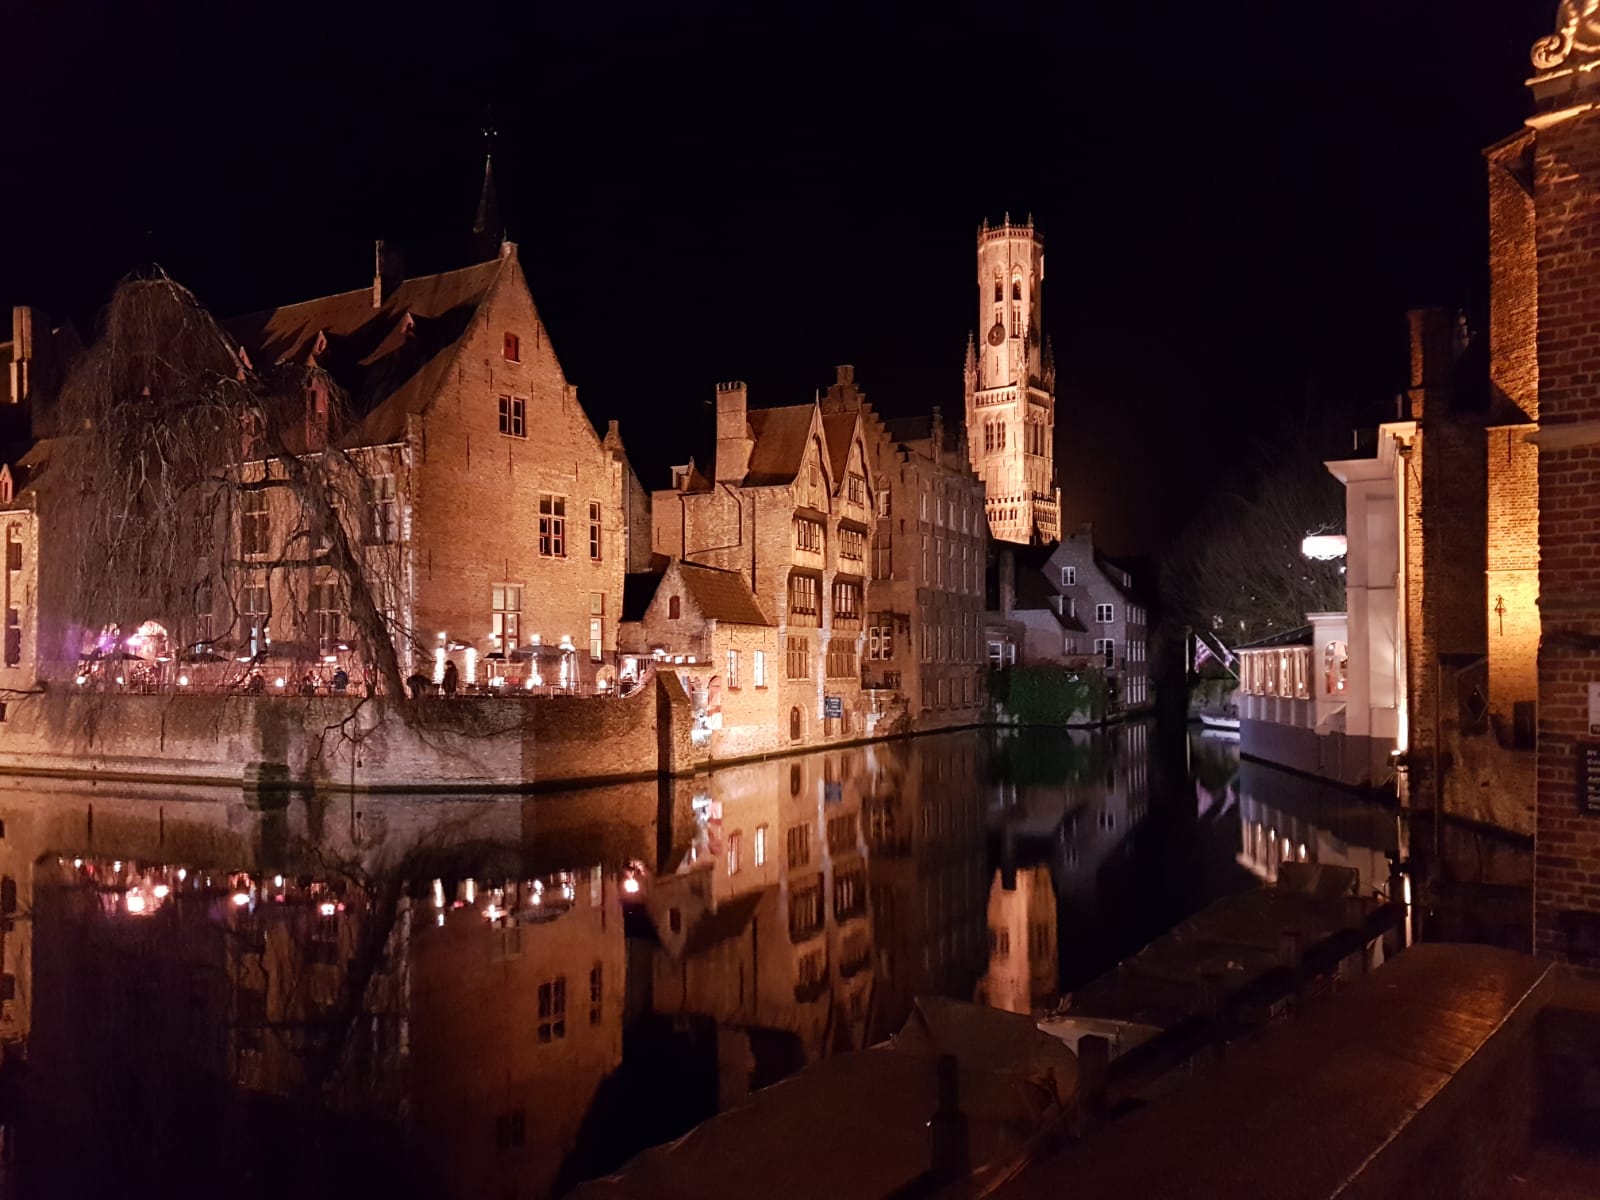 A day in Bruges